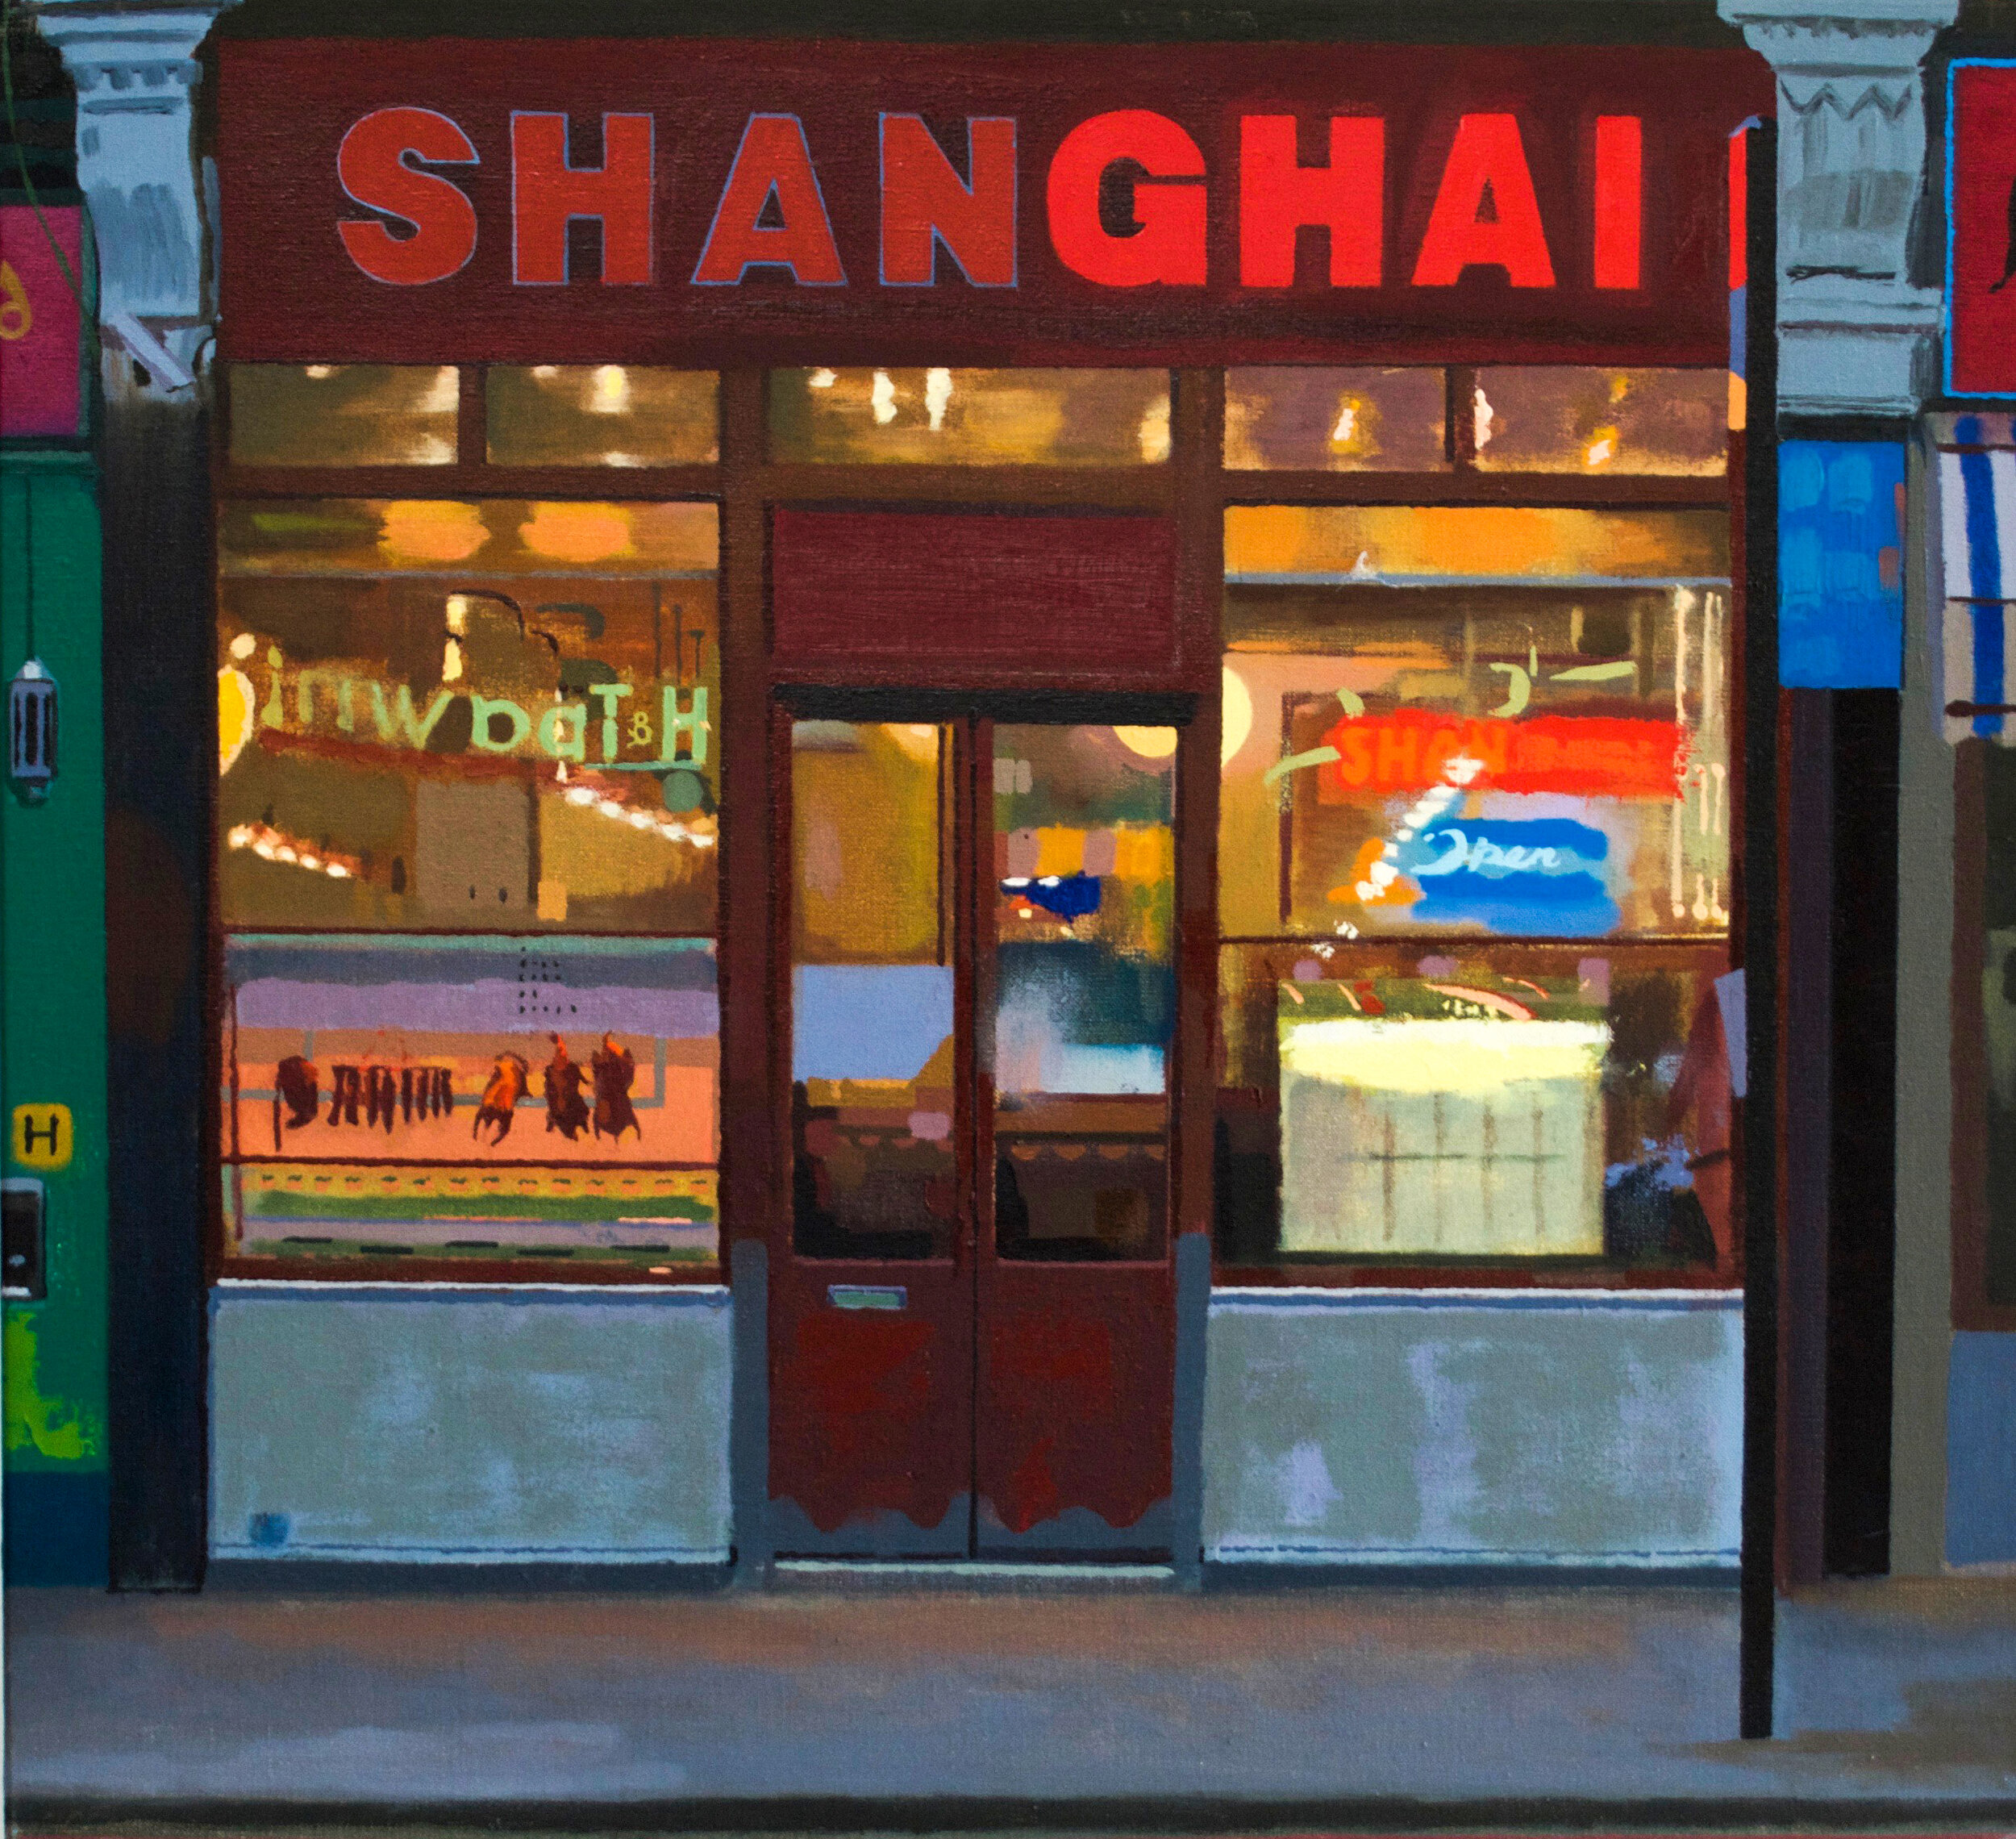  Shanghai, Dalston  Oil on Linen  55cm x 60cm  2010   